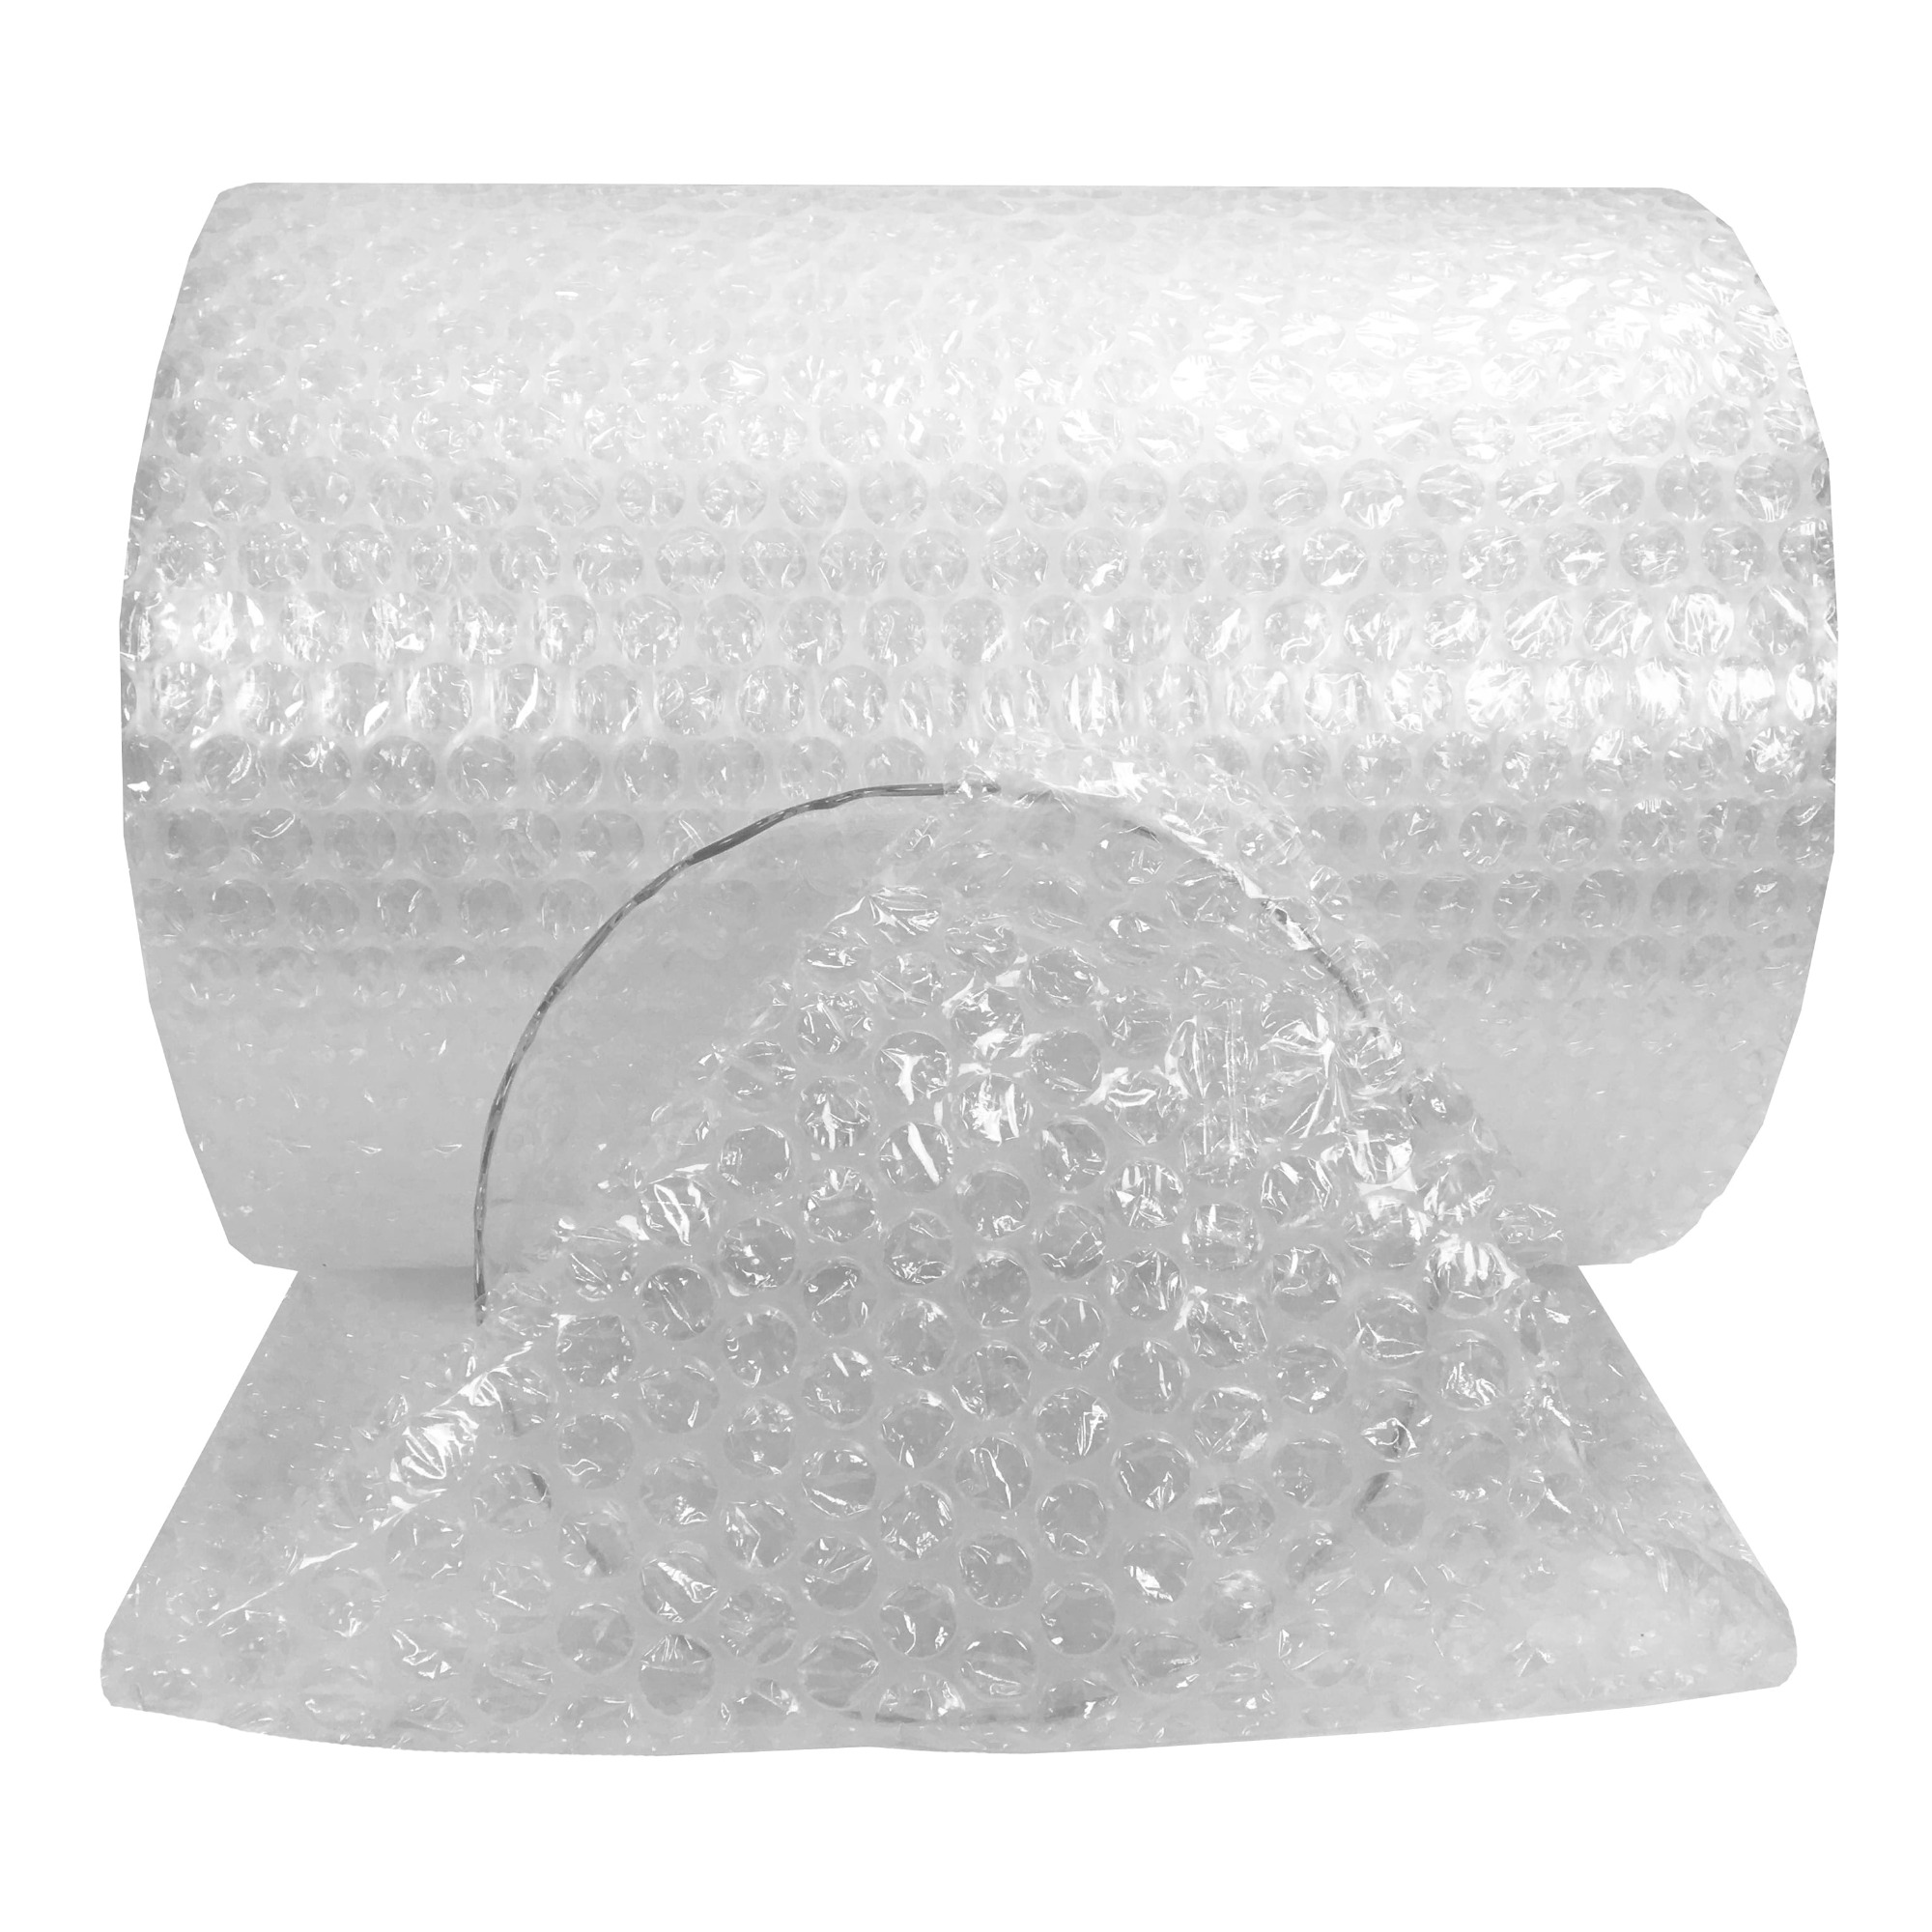 UOFFICE Bubble Cushioning Wrap Roll 24&quot; Wide x 800' Medium 5/16&quot; Bubbles